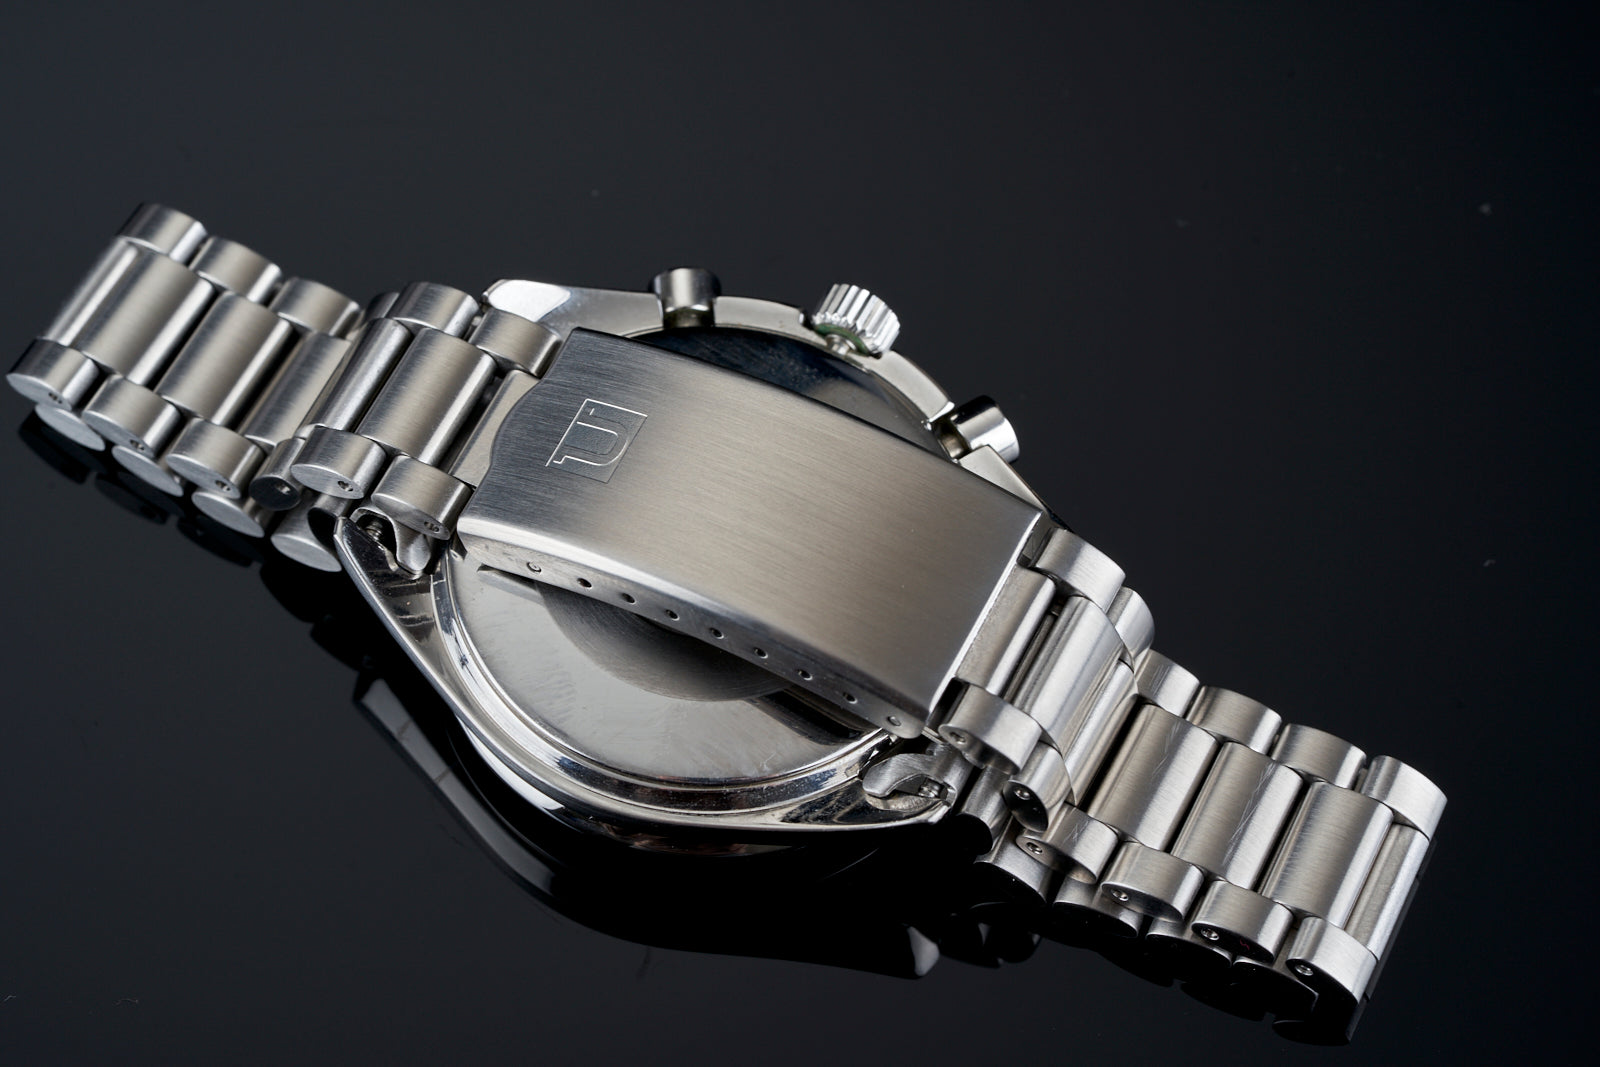 Bracelet Upgrades for your OMEGA Speedmaster and SEIKO SARB033 - YouTube